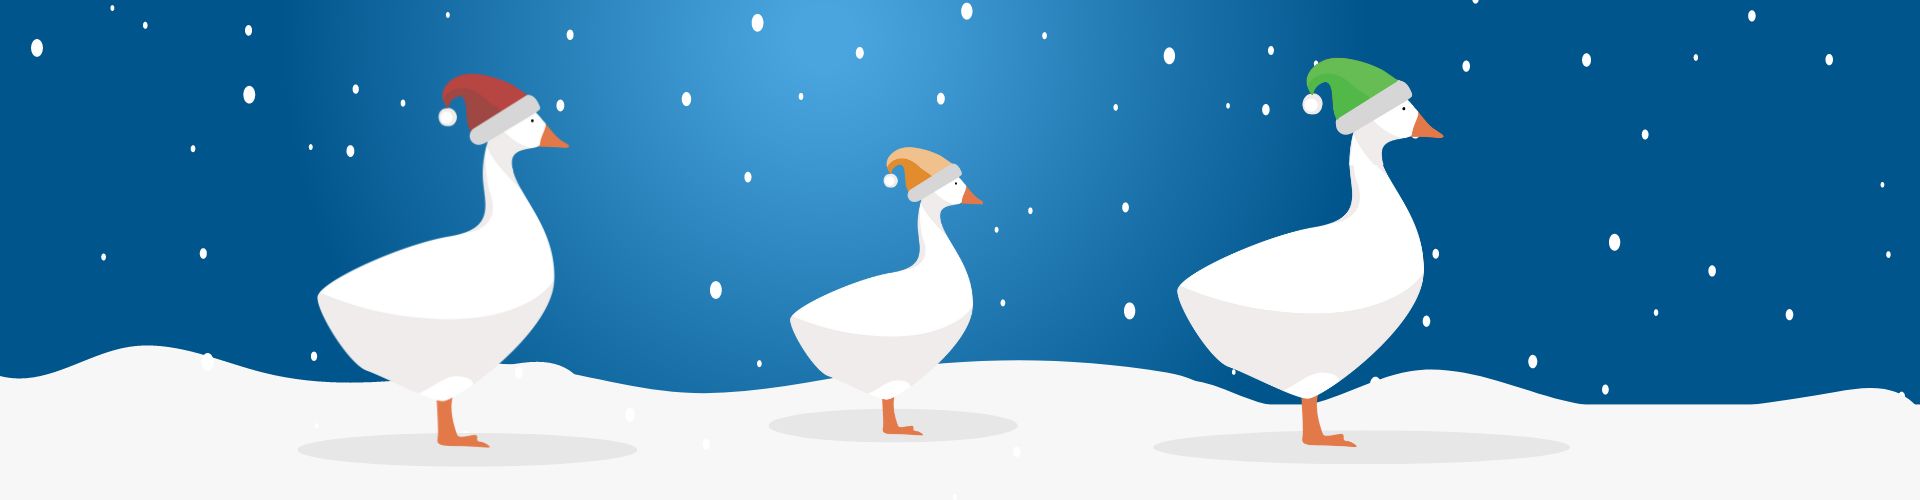 three white geese wearing winter hats walking on snow